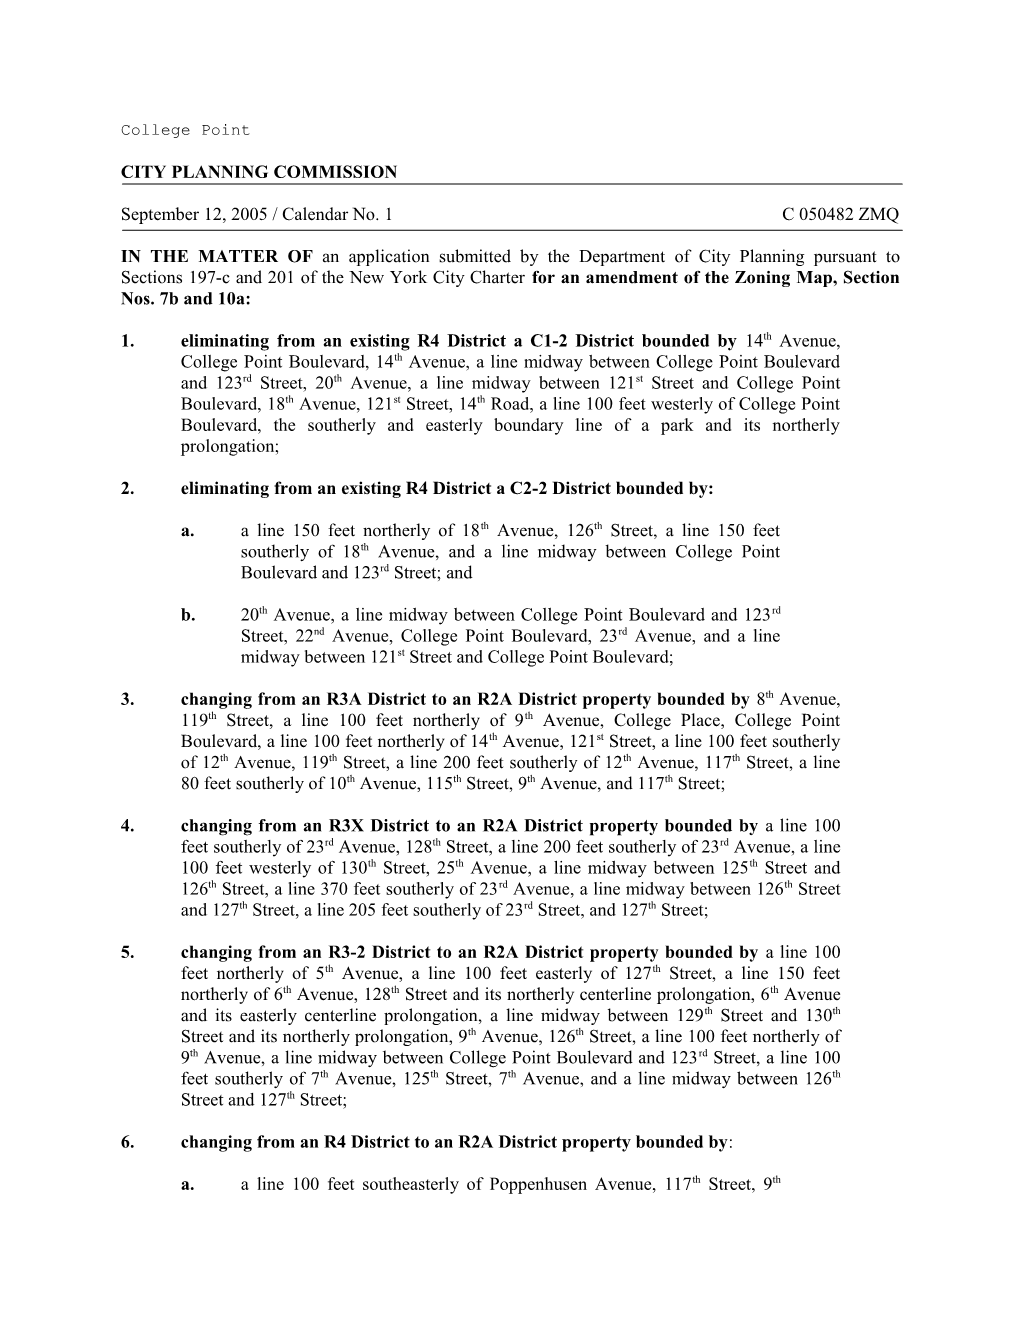 City Planning Commission Draft # 1 08/22/05